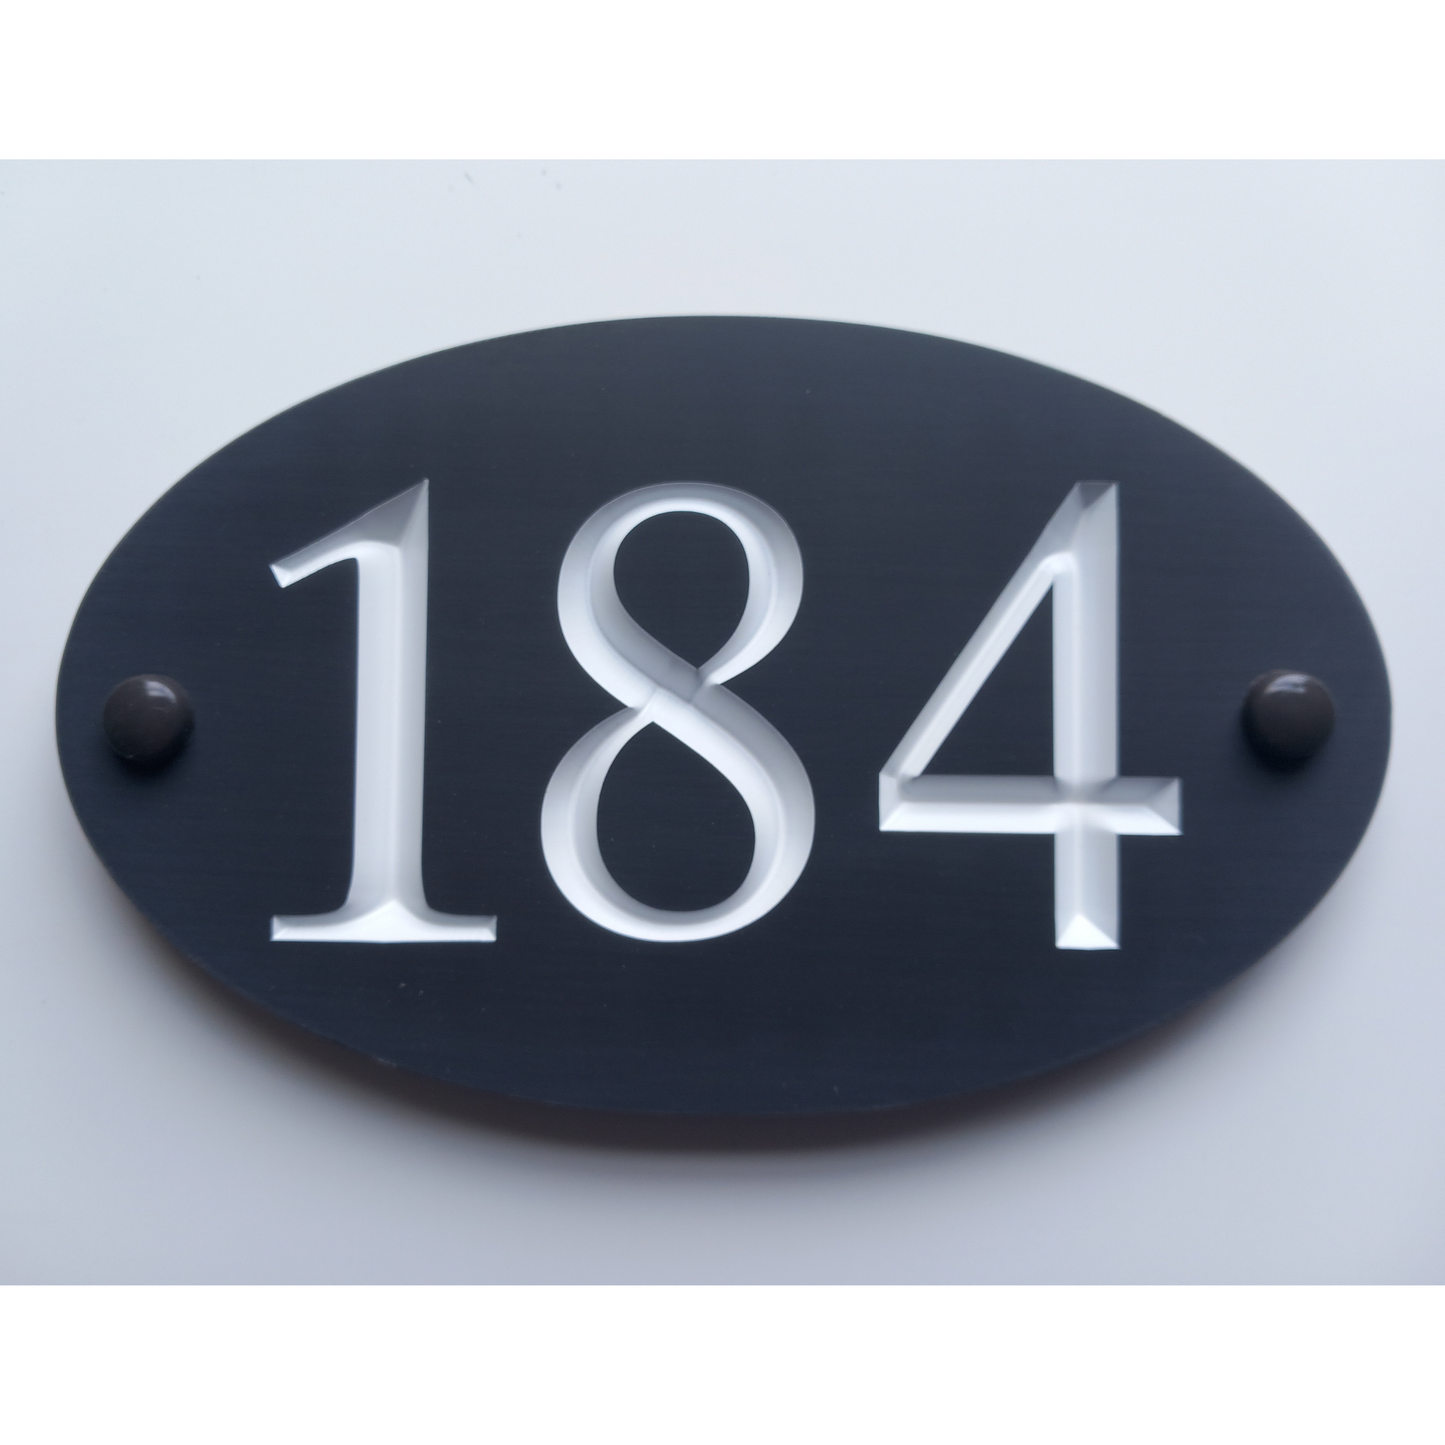 Grey Oval Corian Sign (195x115mm)